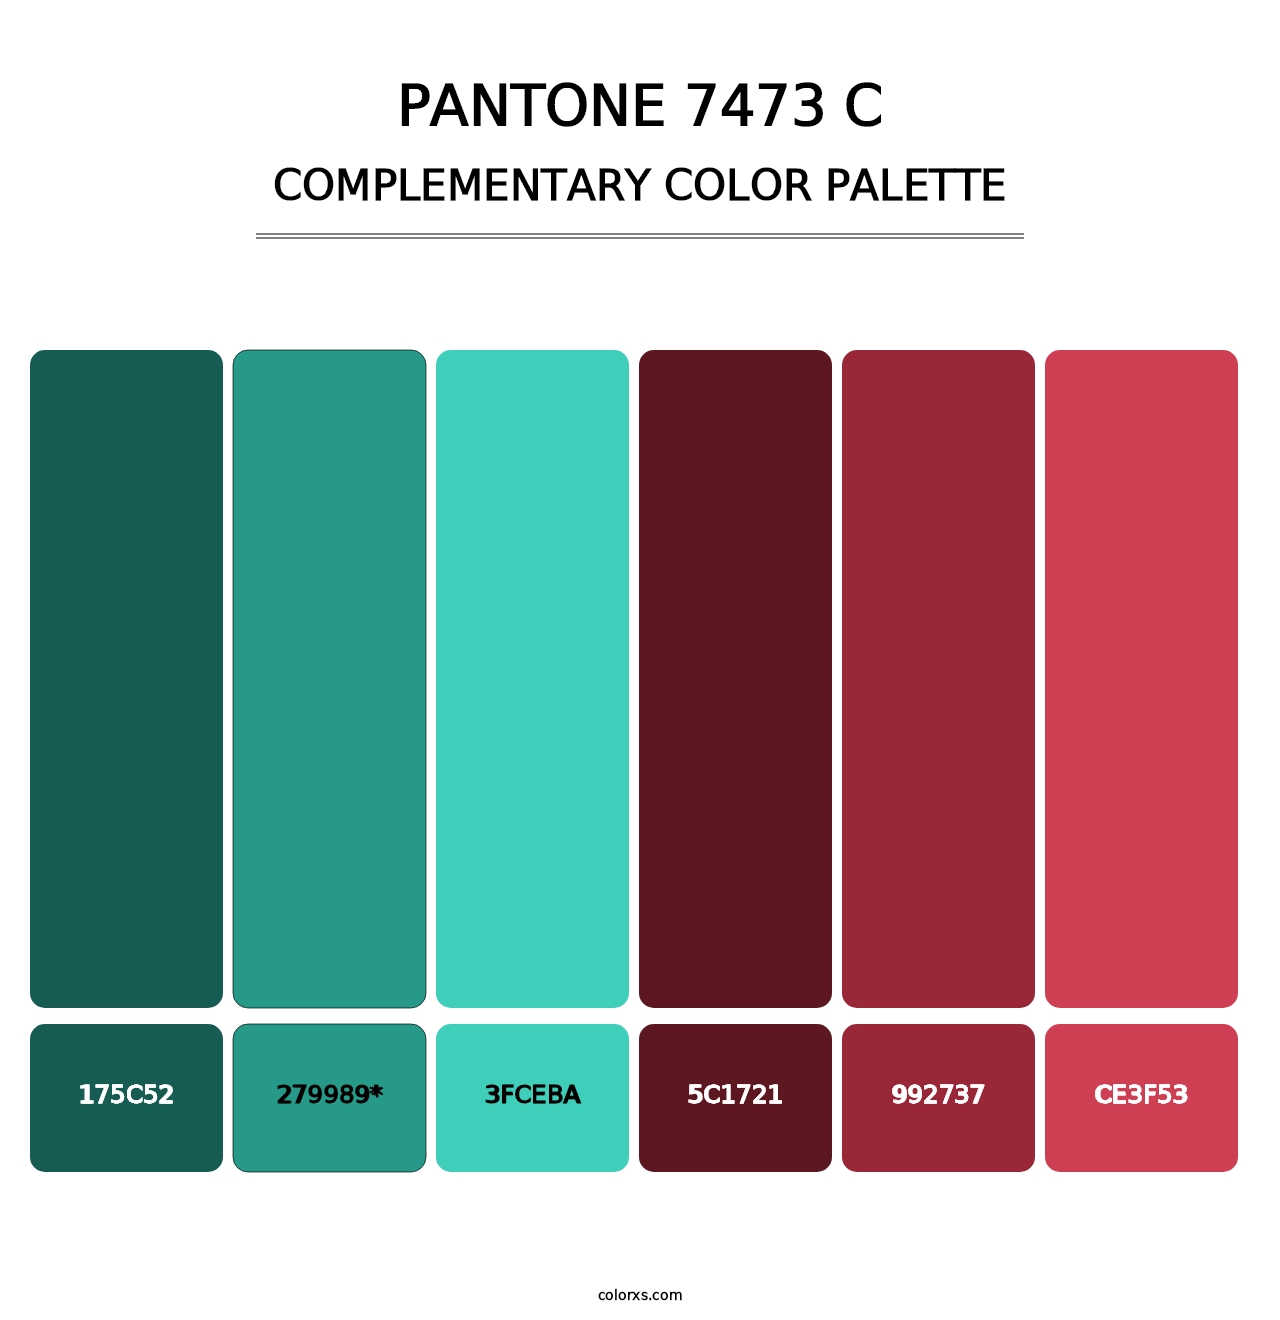 PANTONE 7473 C - Complementary Color Palette